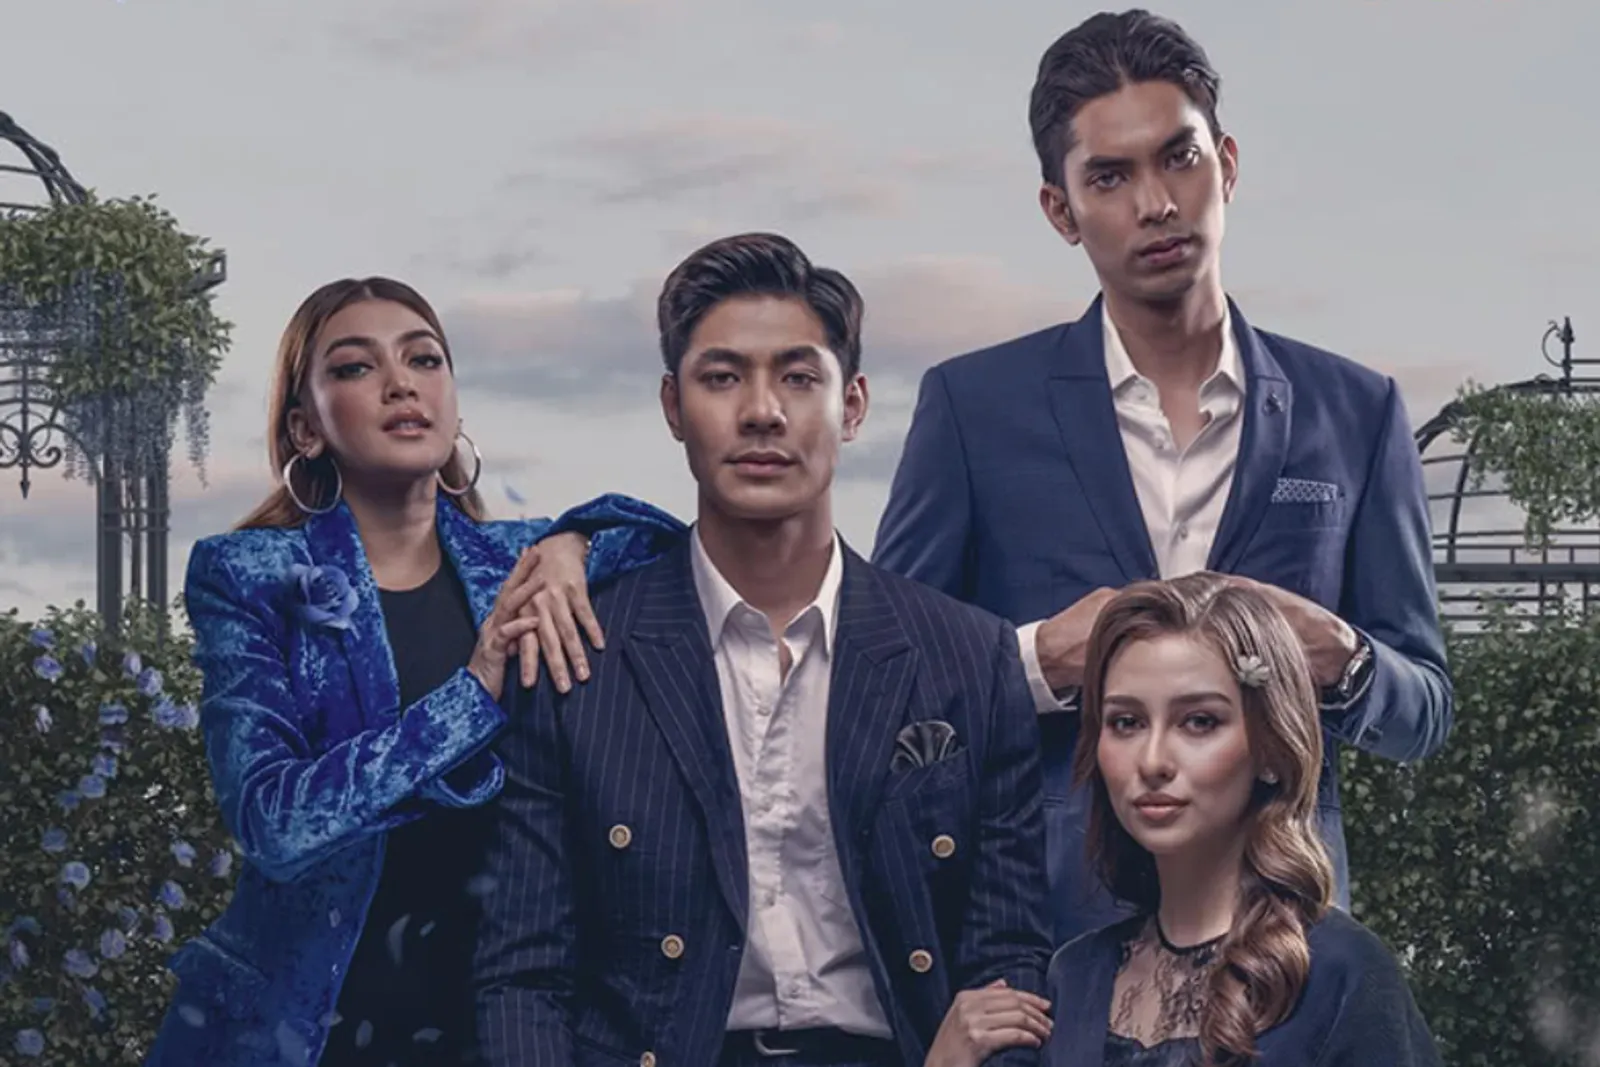 7 Film Malaysia tentang Perjodohan, Hati-Hati Baper!